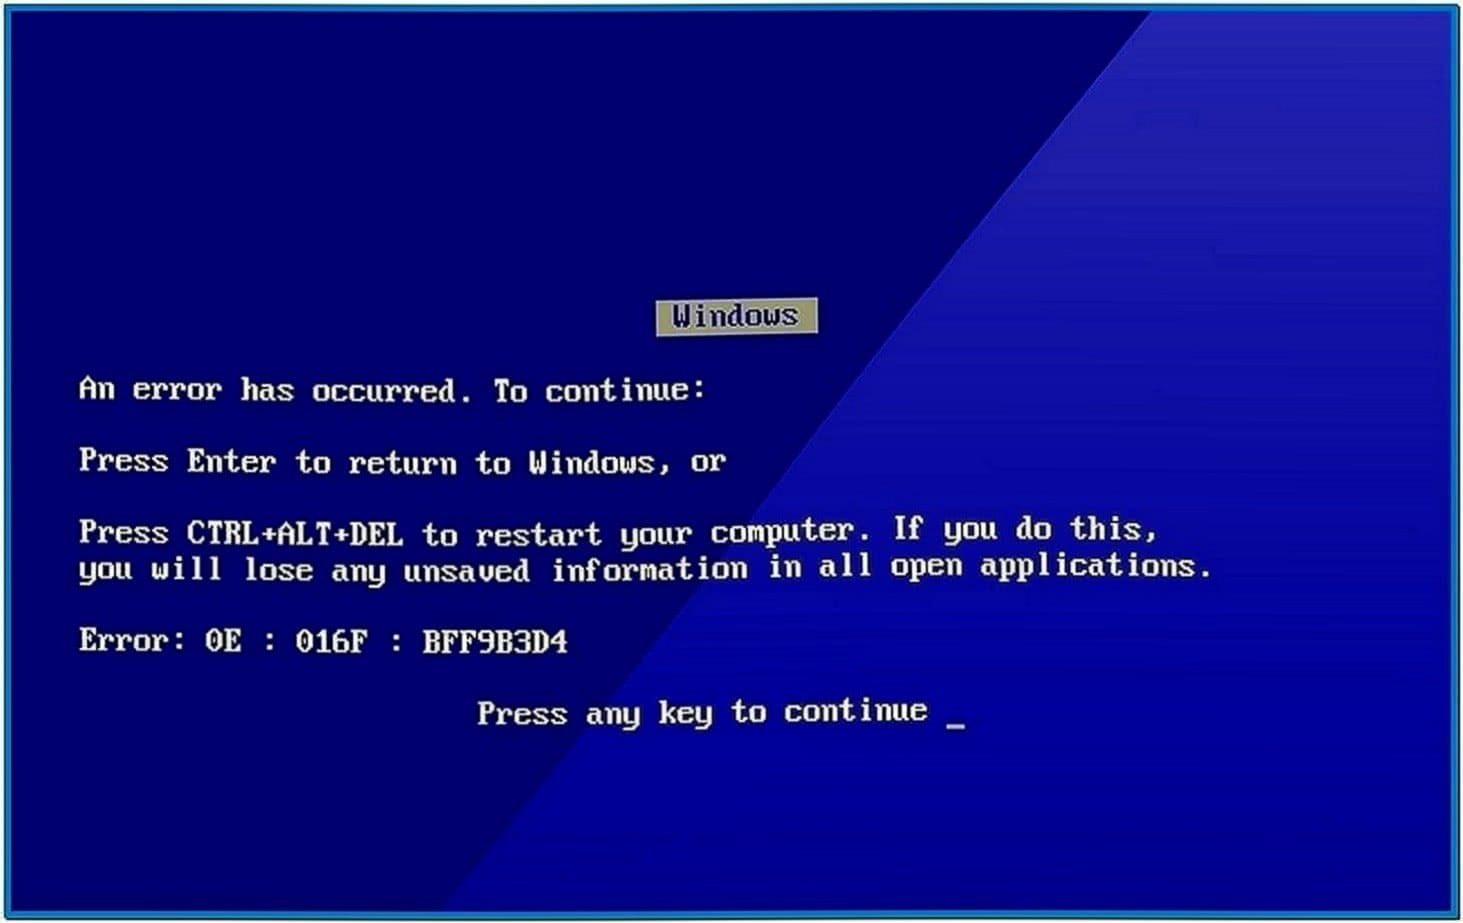 Windows Blue Screen of Death Screensaver